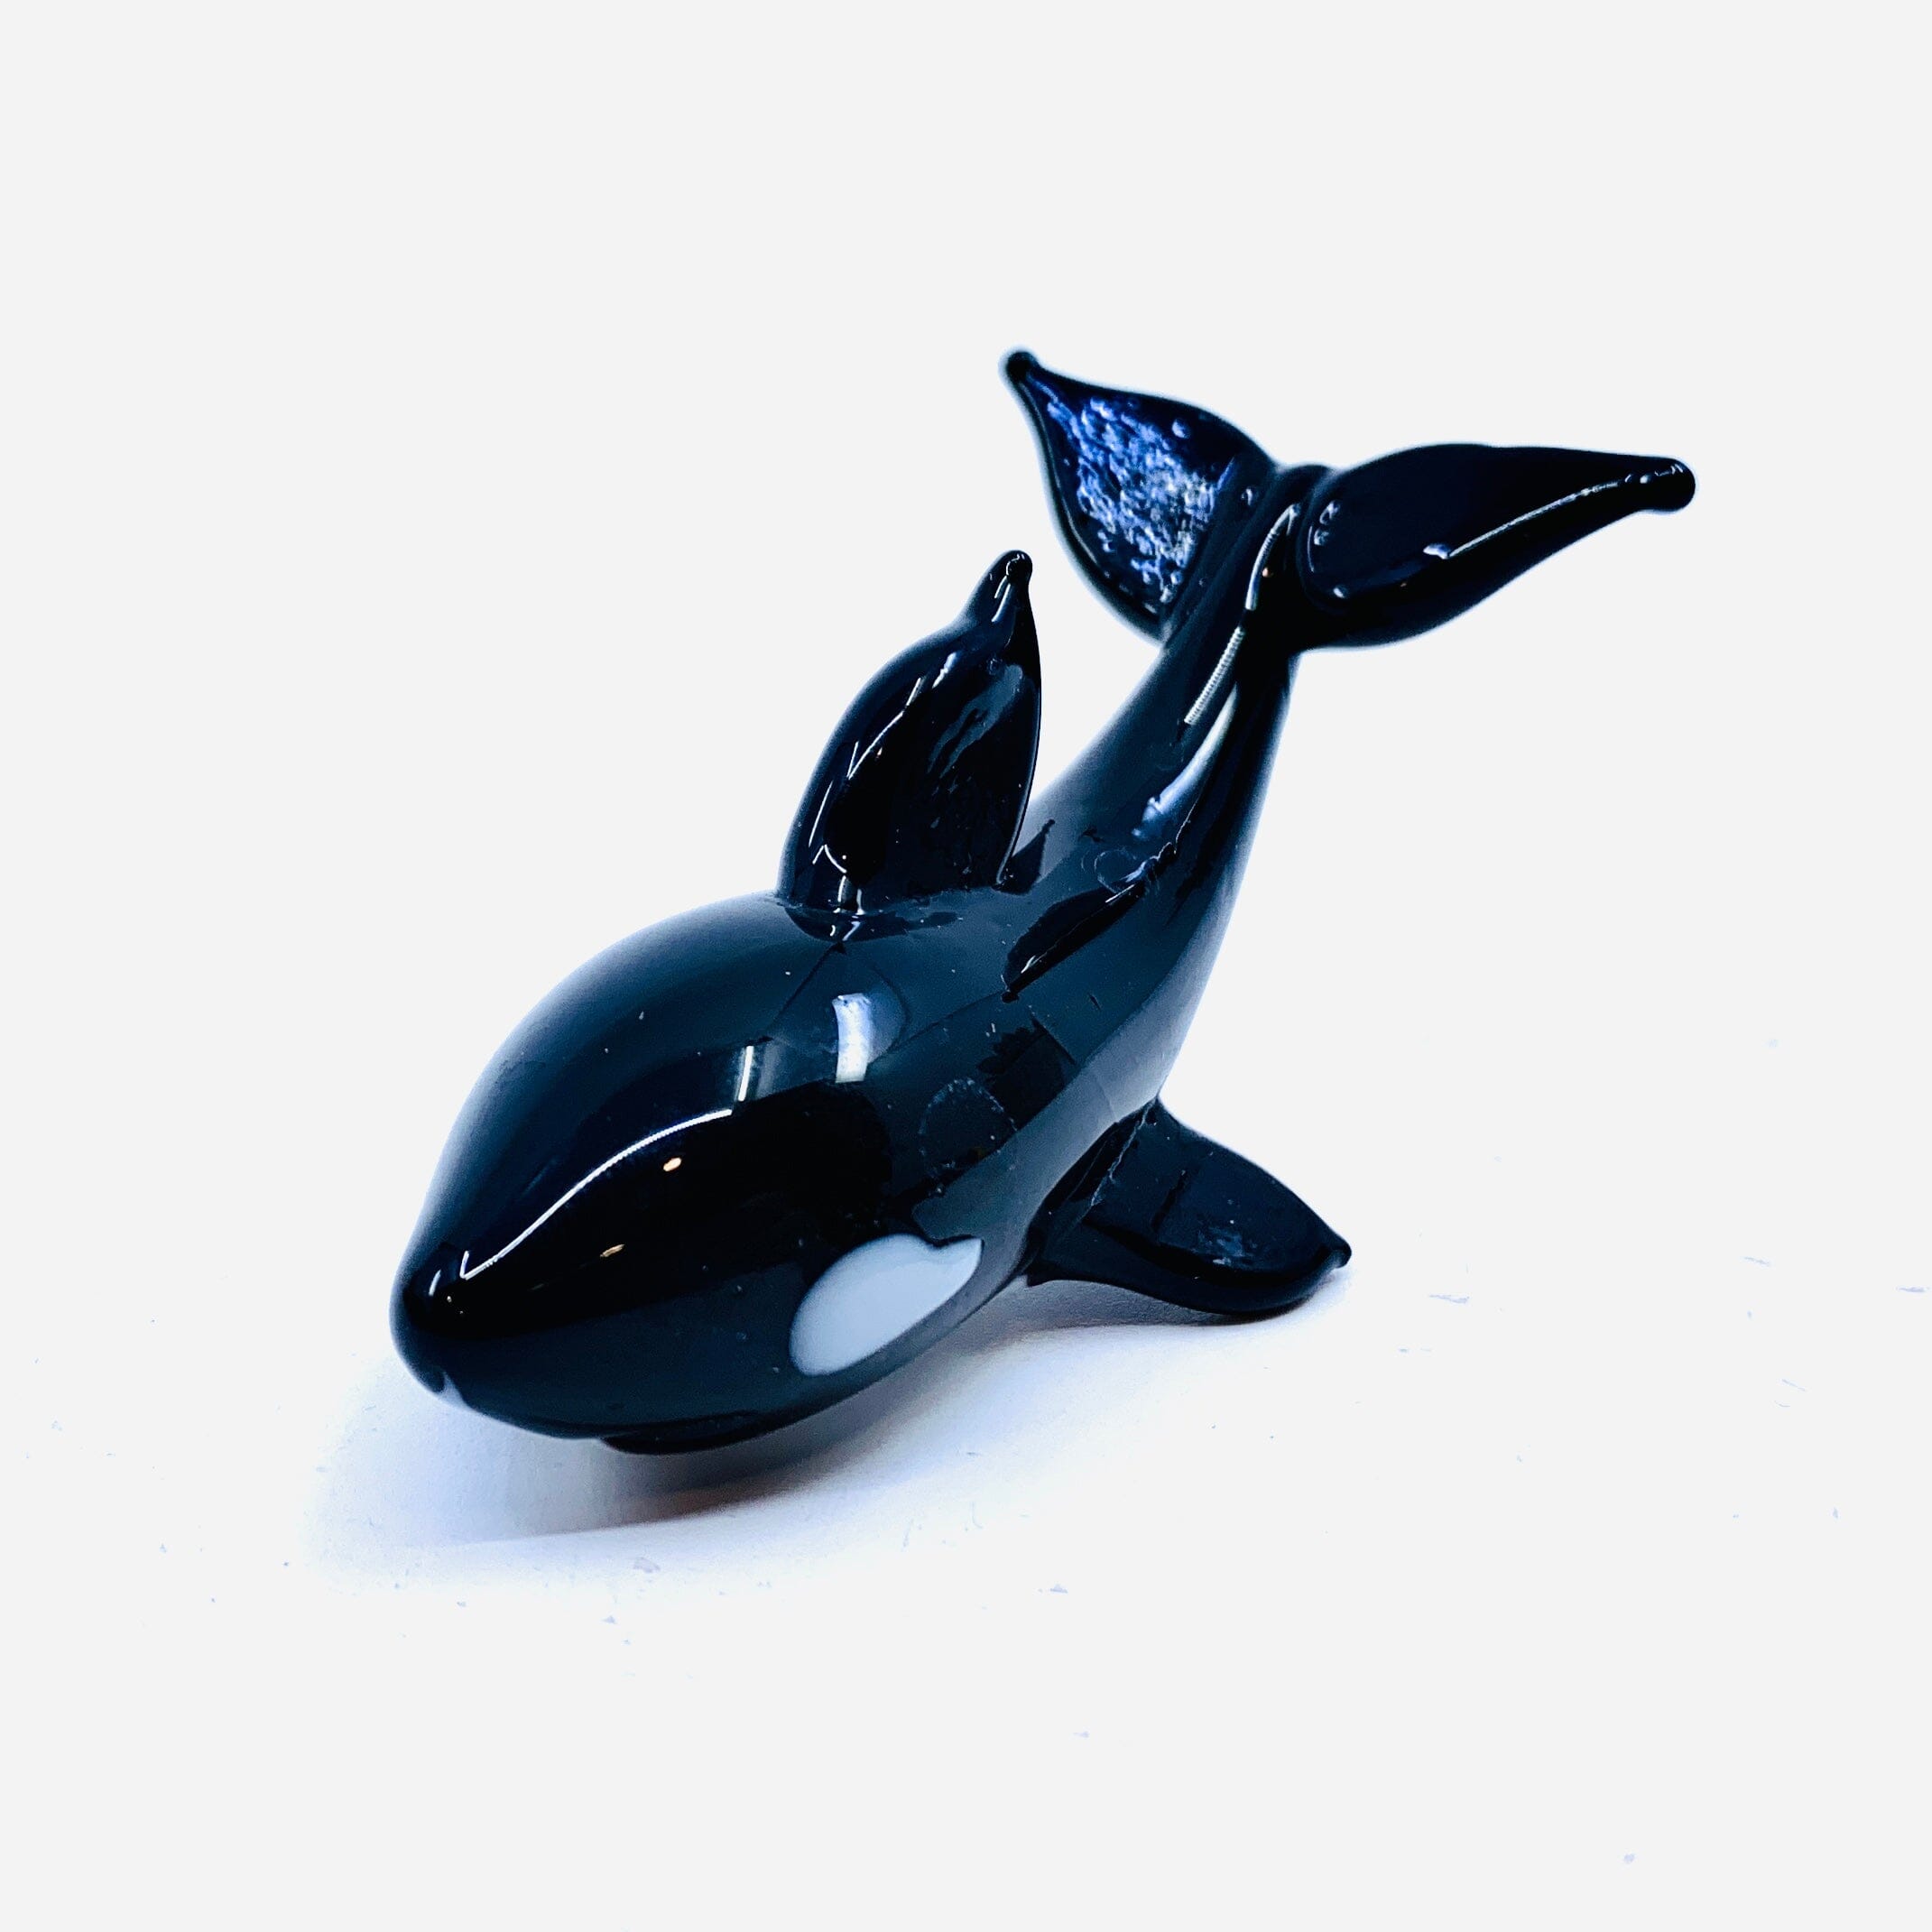 Drinking Cup With Handmade Orca Whale Figurine, Glass Handmade